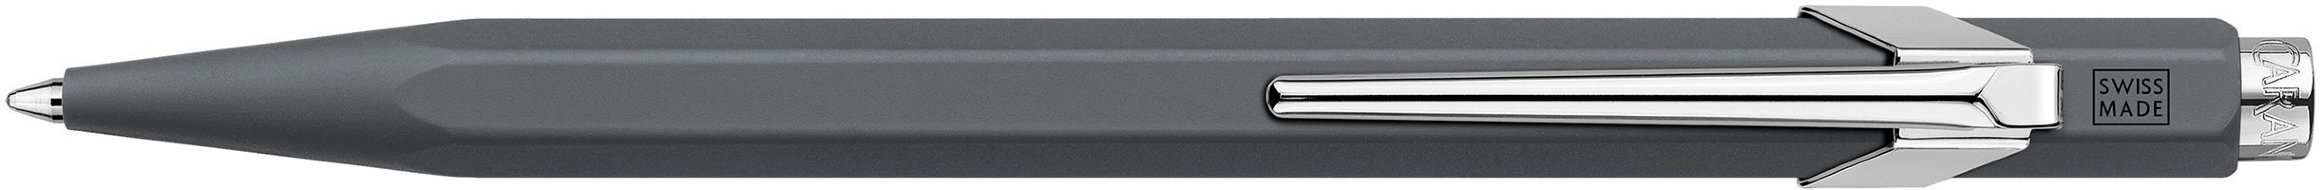 Шариковая ручка Caran d'Ache Office 849 Office Classic темно-серый M синие чернила без упаковки